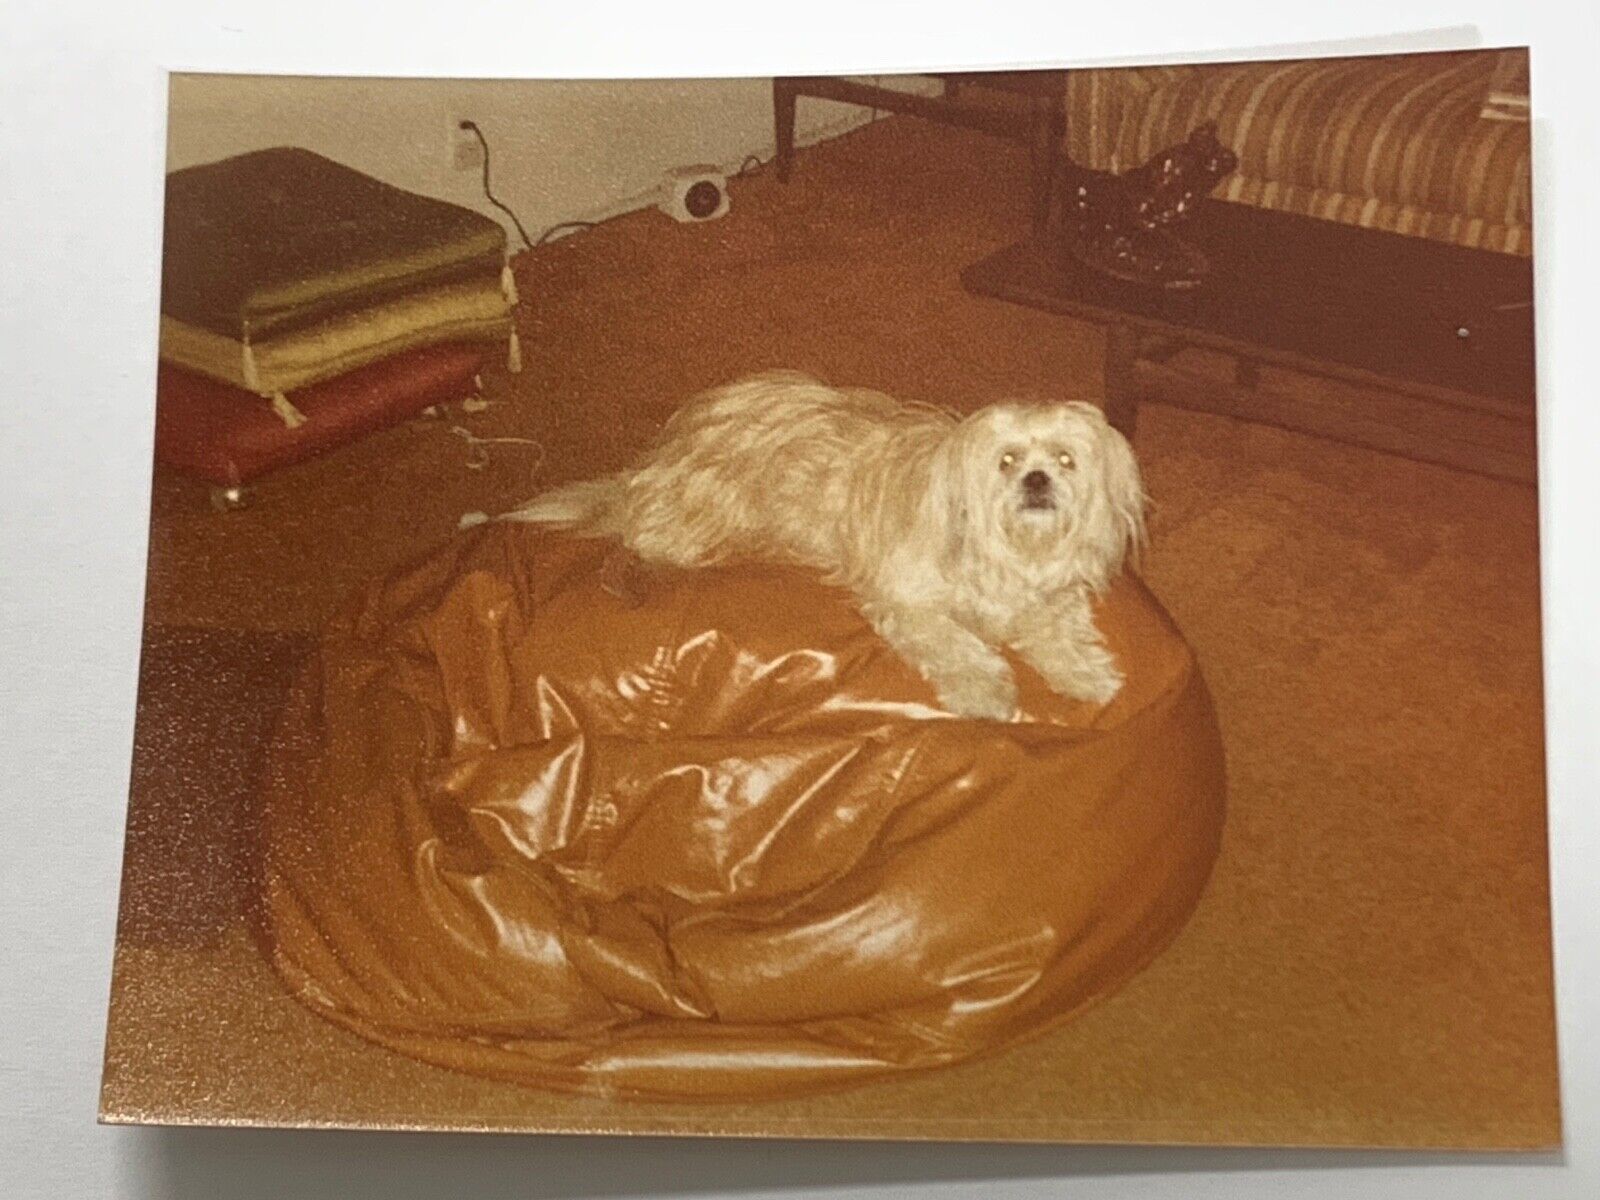 (Ae) Vintage Original FOUND PHOTO Photograph Snapshot Shaggy White Dog Bean Bag